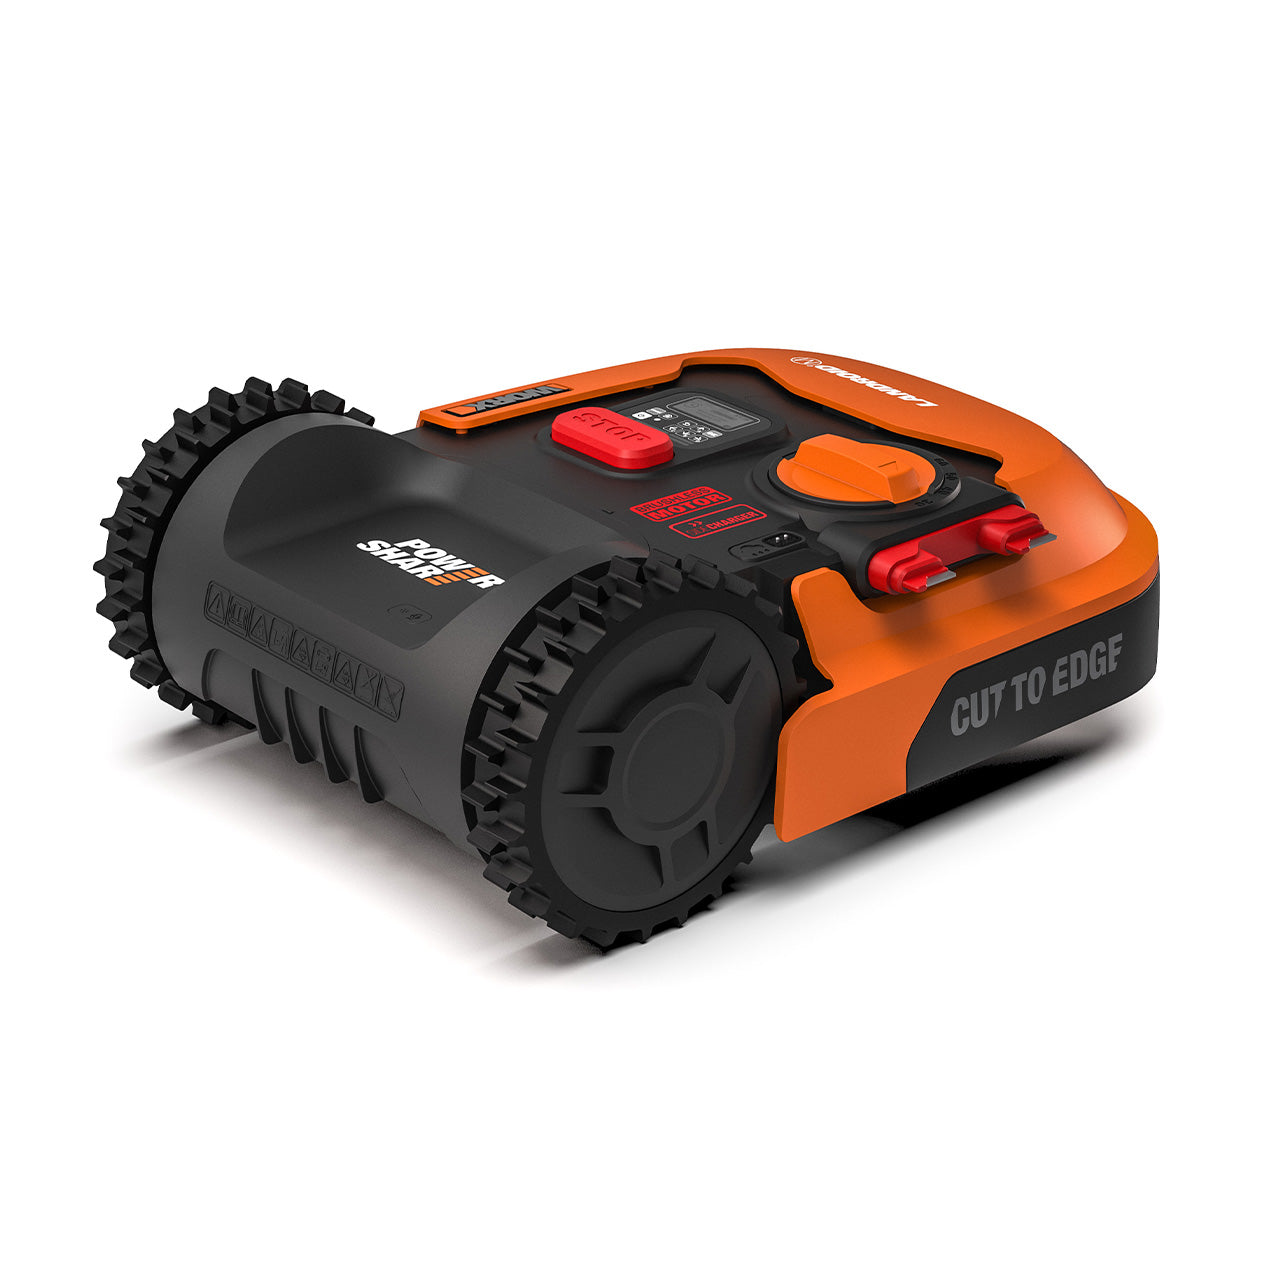 WORX 1000m2 LANDROID Automatic Robot Lawn Mower & Starter Kit – WR140E